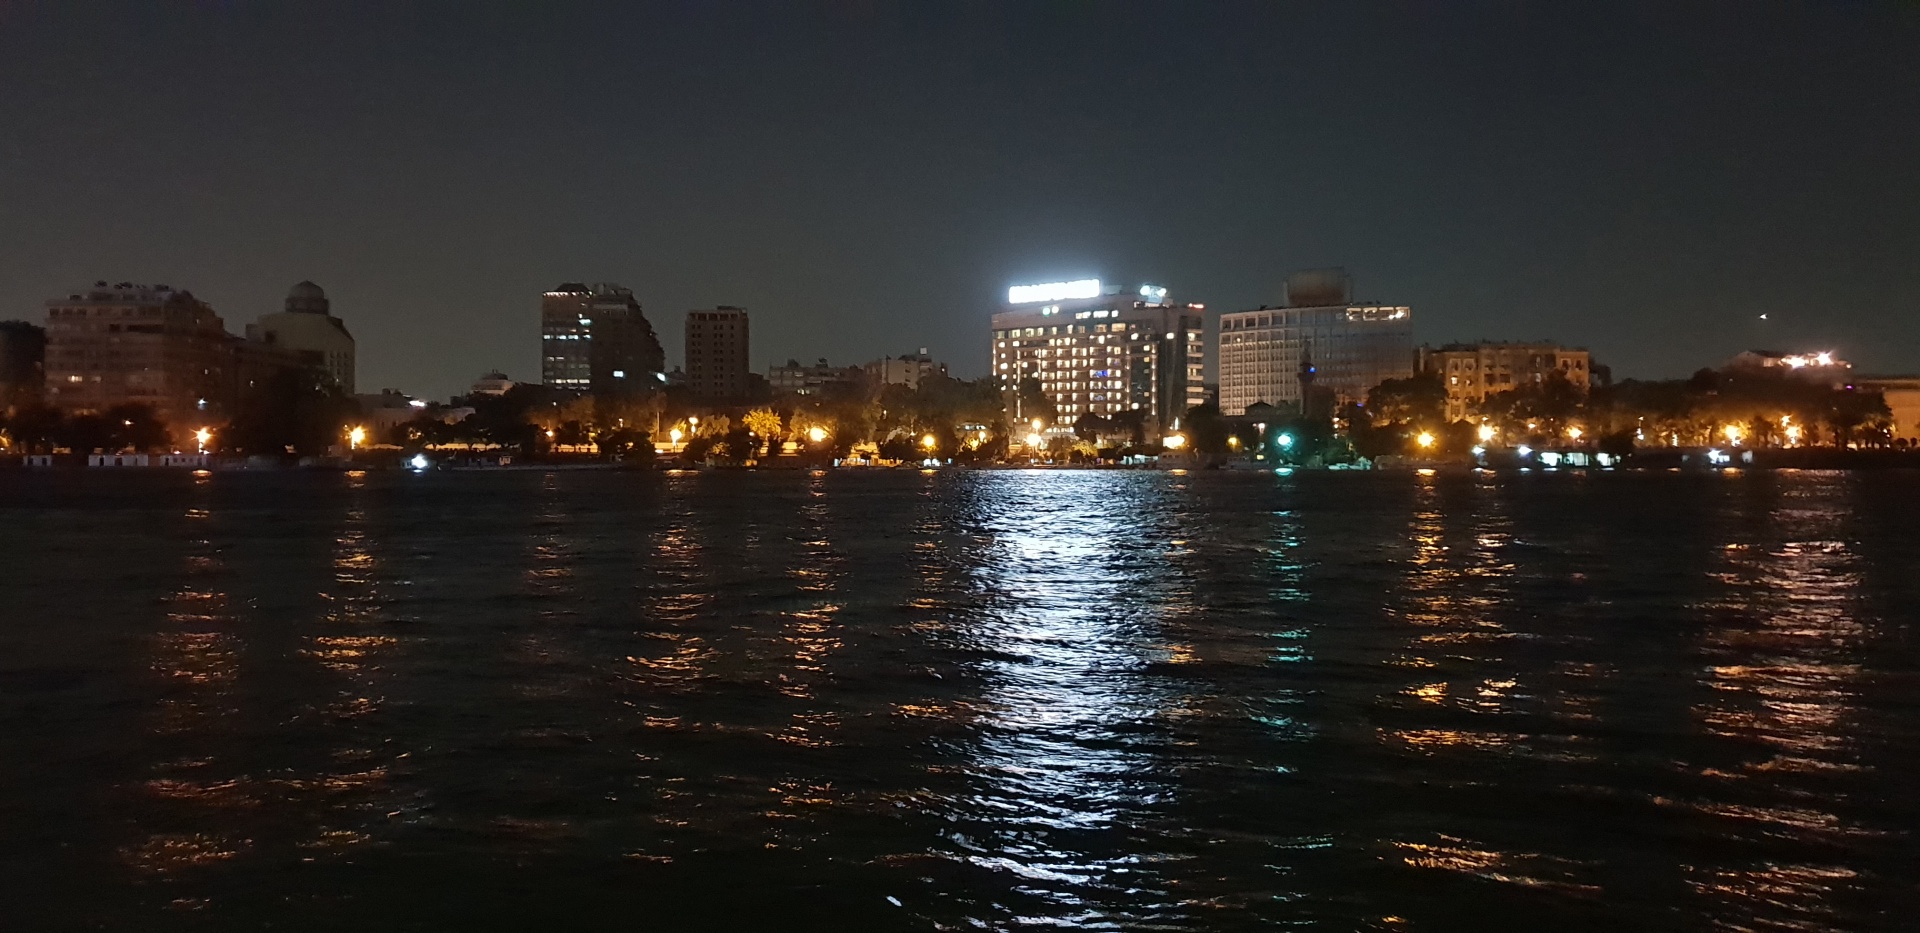 Nijl rivier in de nacht